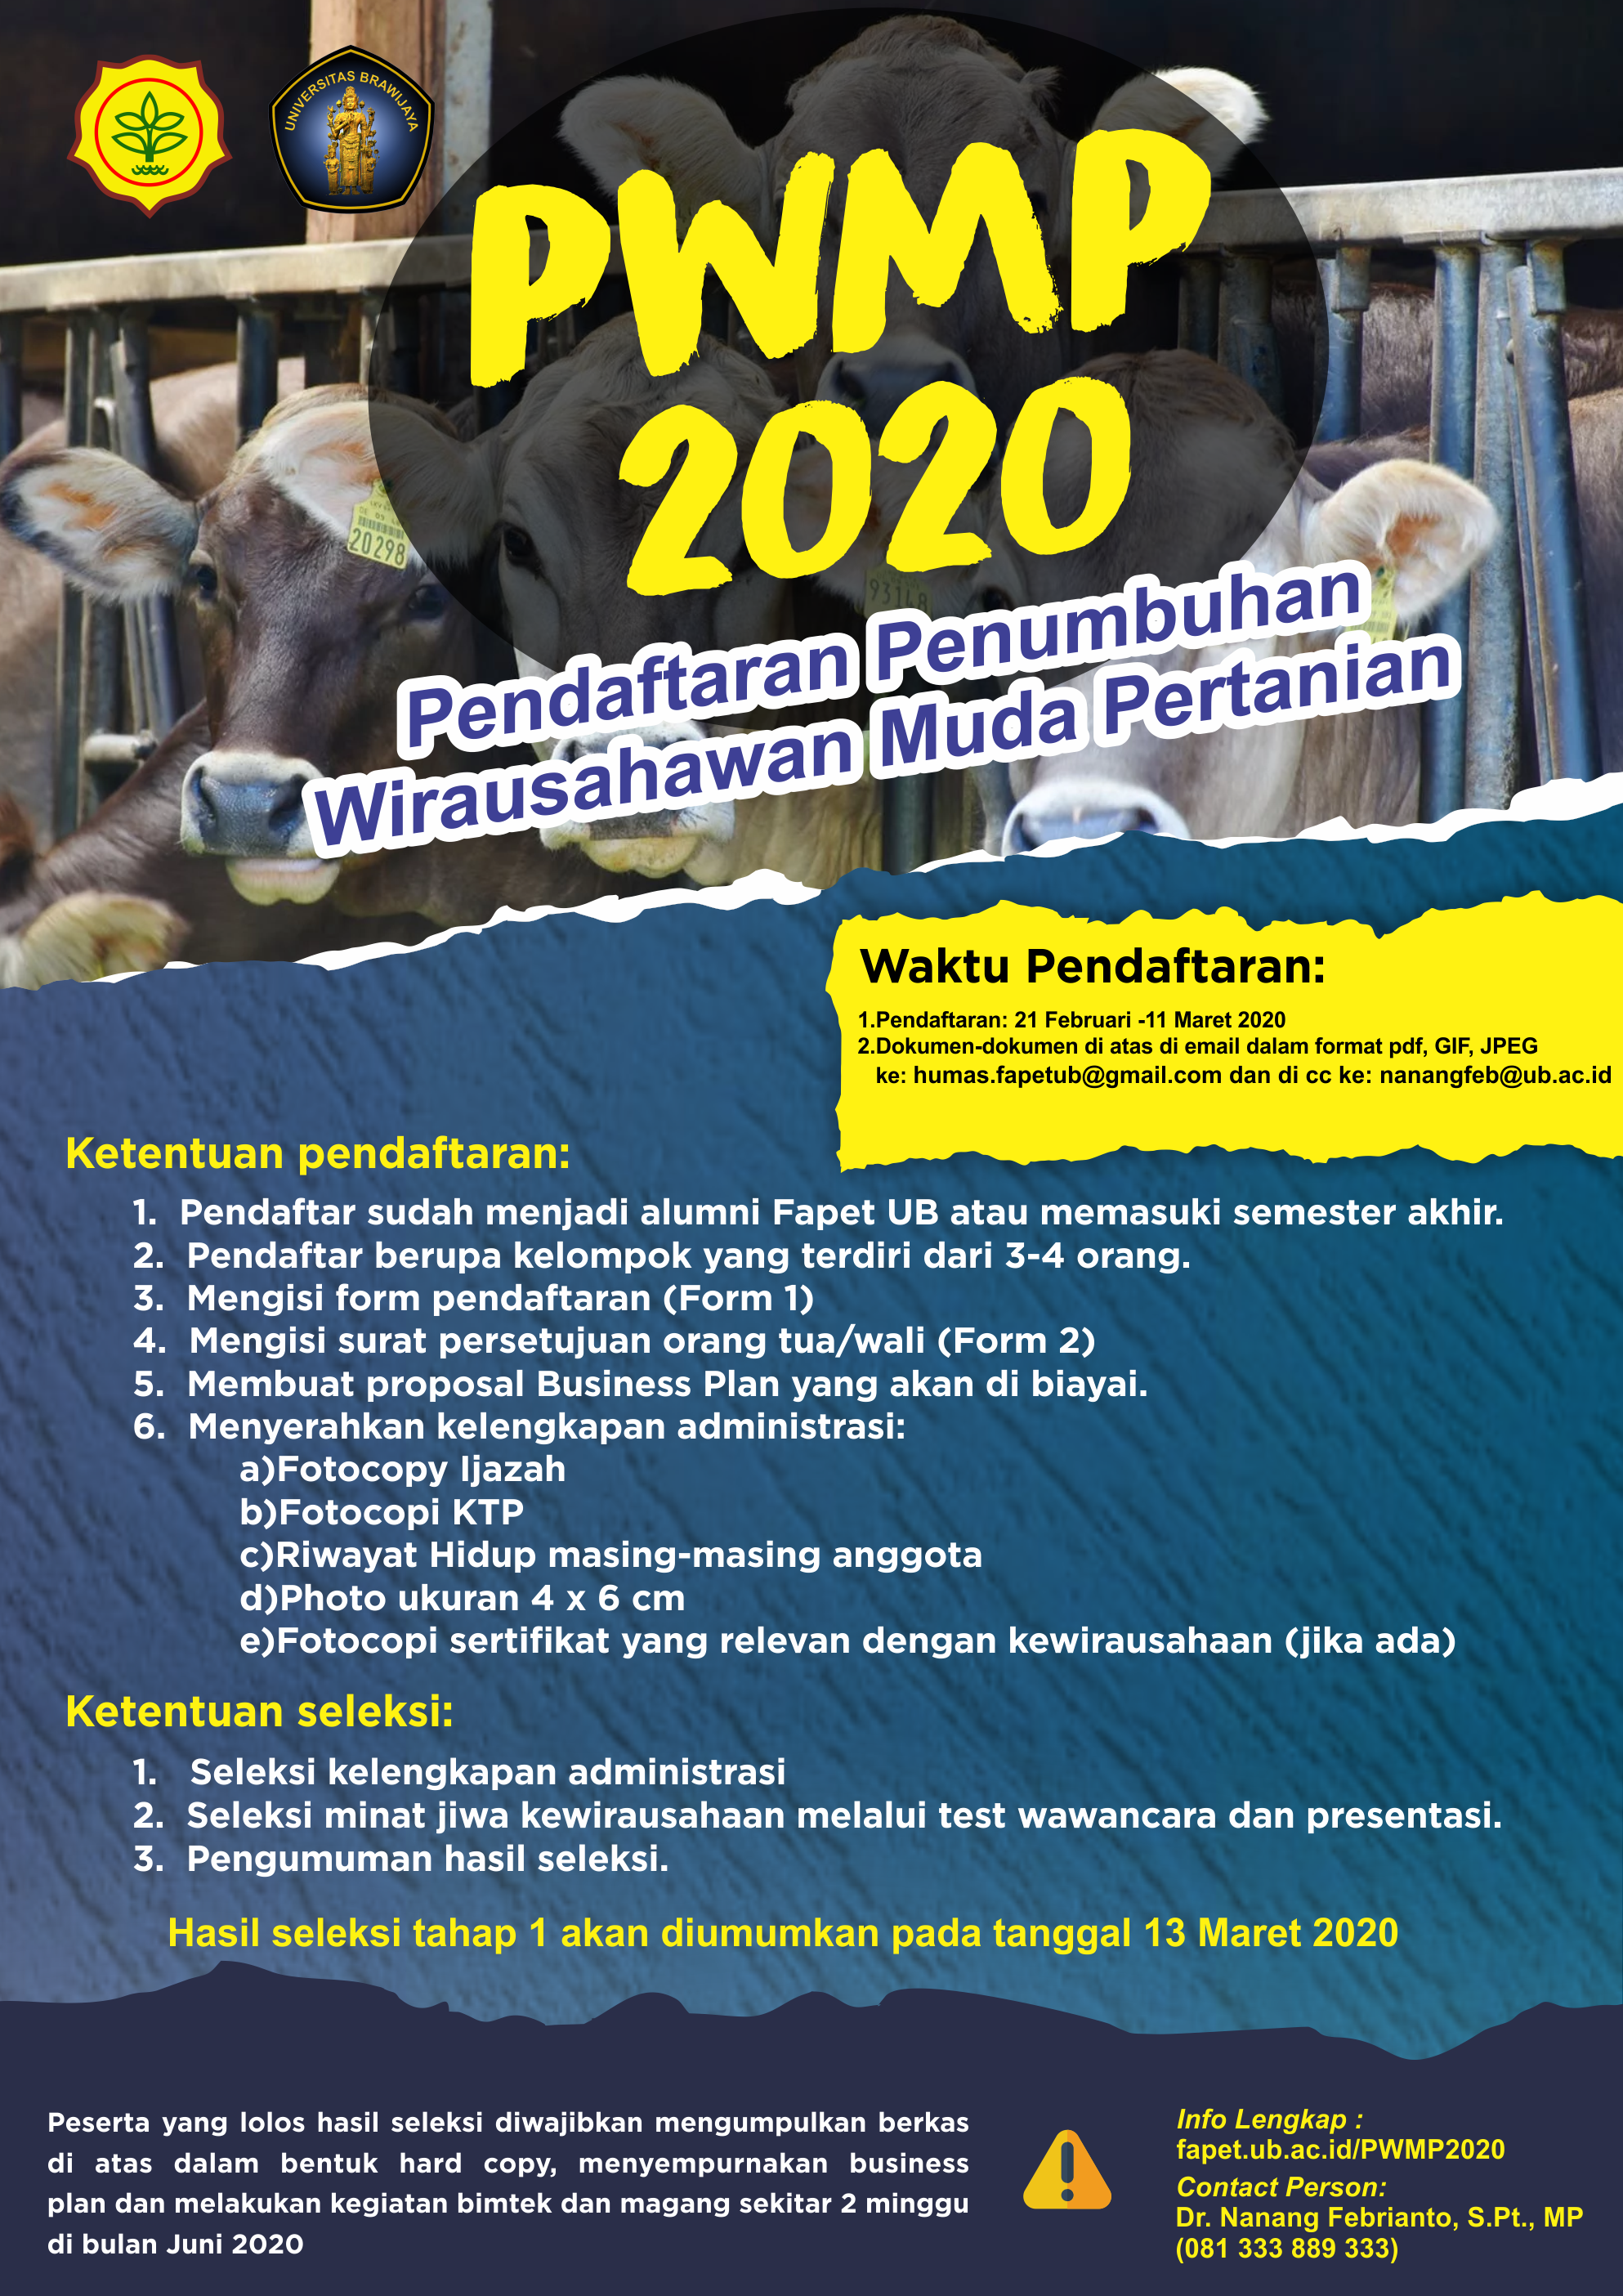 Pendaftaran Penumbuhan Wirausahawan Muda Pertanian (PWMP) 2020